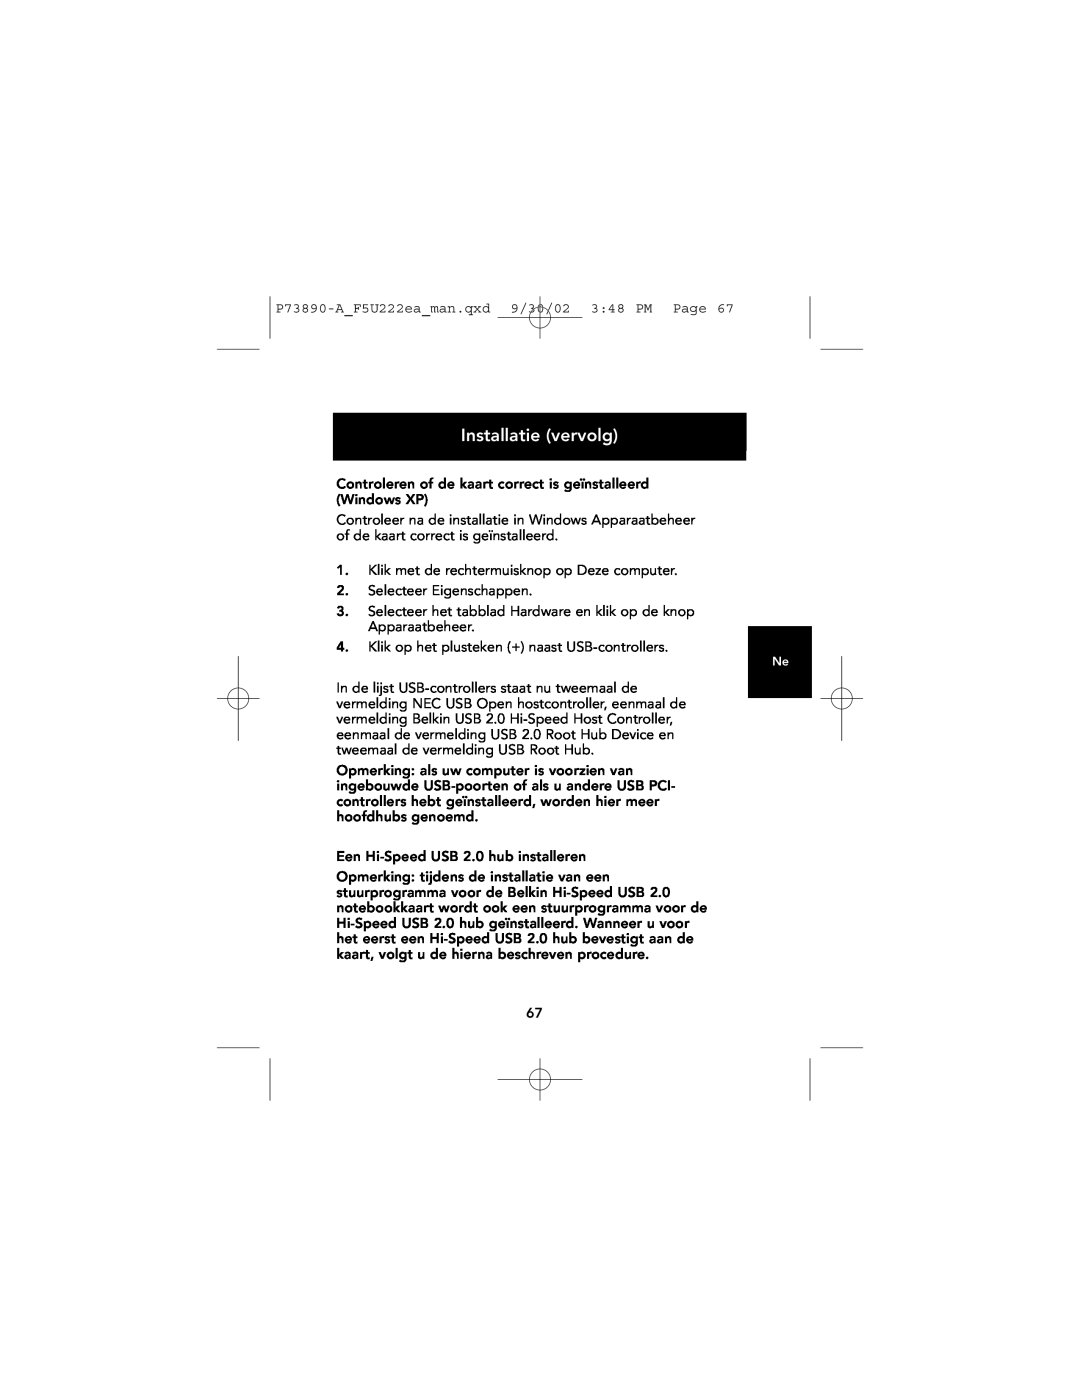 Belkin P73890EA-A manual Installatie vervolg, P73890-AF5U222eaman.qxd 9/30/02 348 PM Page 